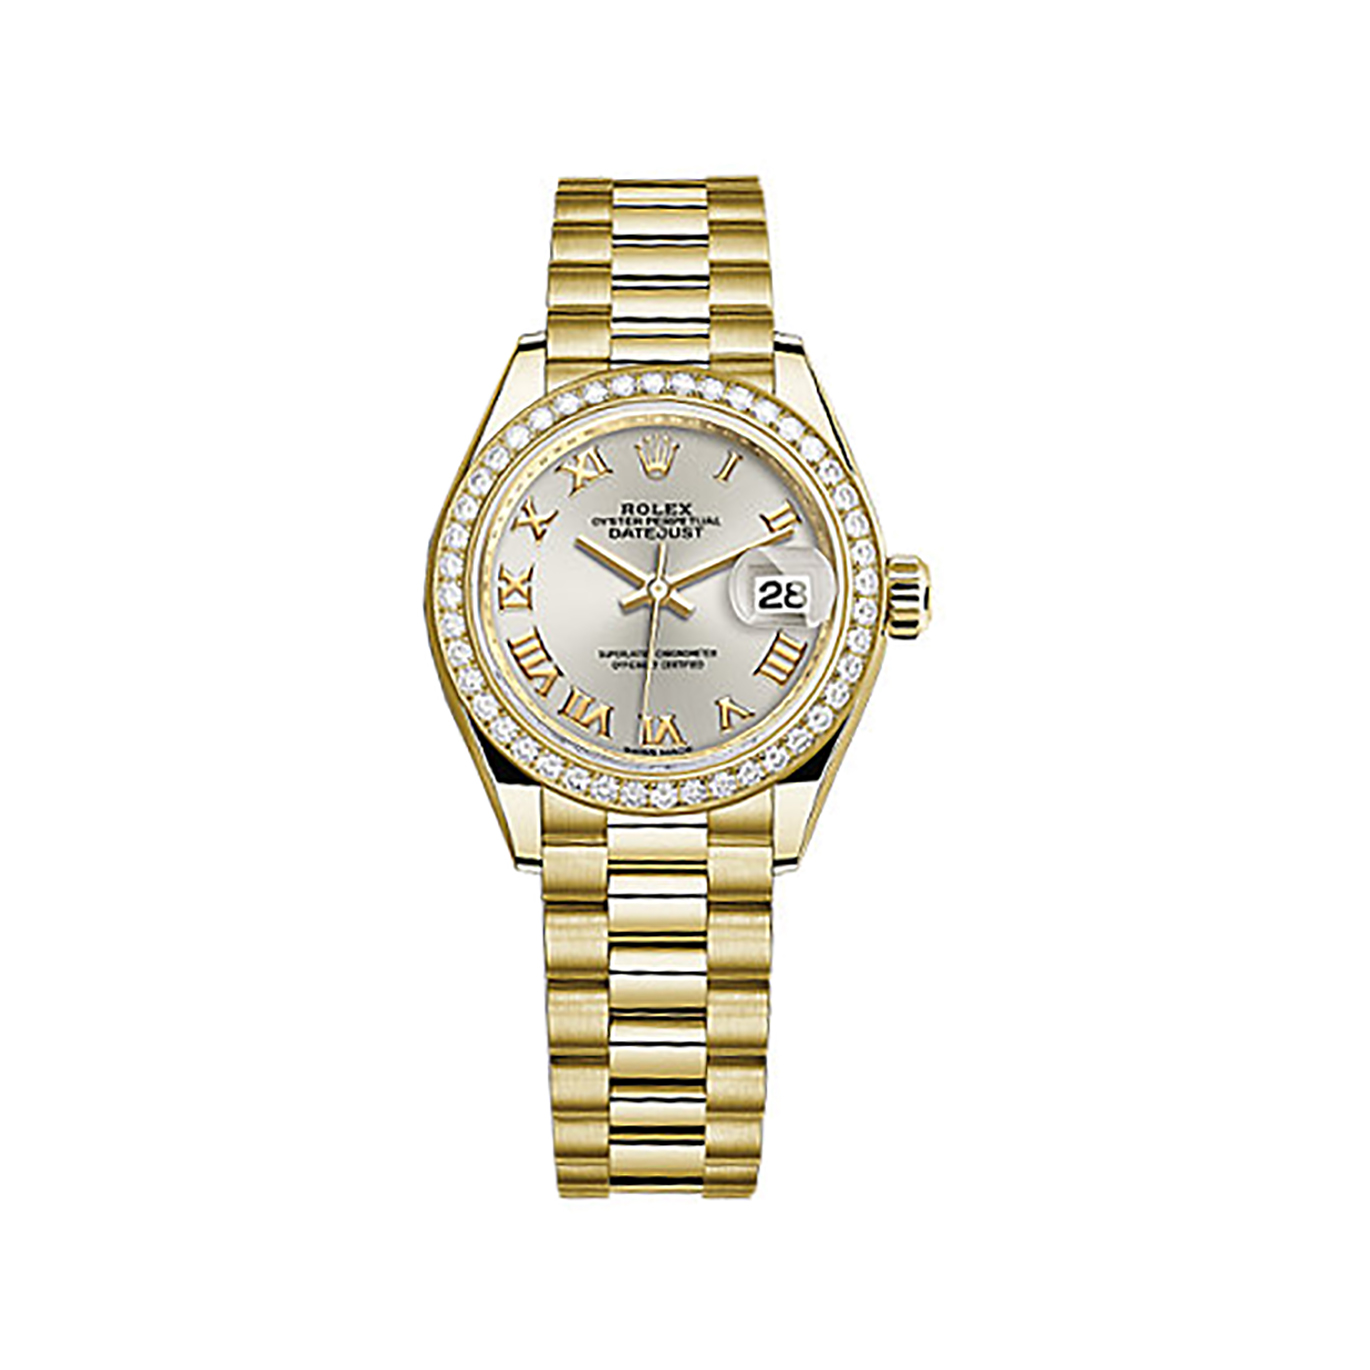 Lady-Datejust 28 279138RBR Gold & Diamonds Watch (Silver)